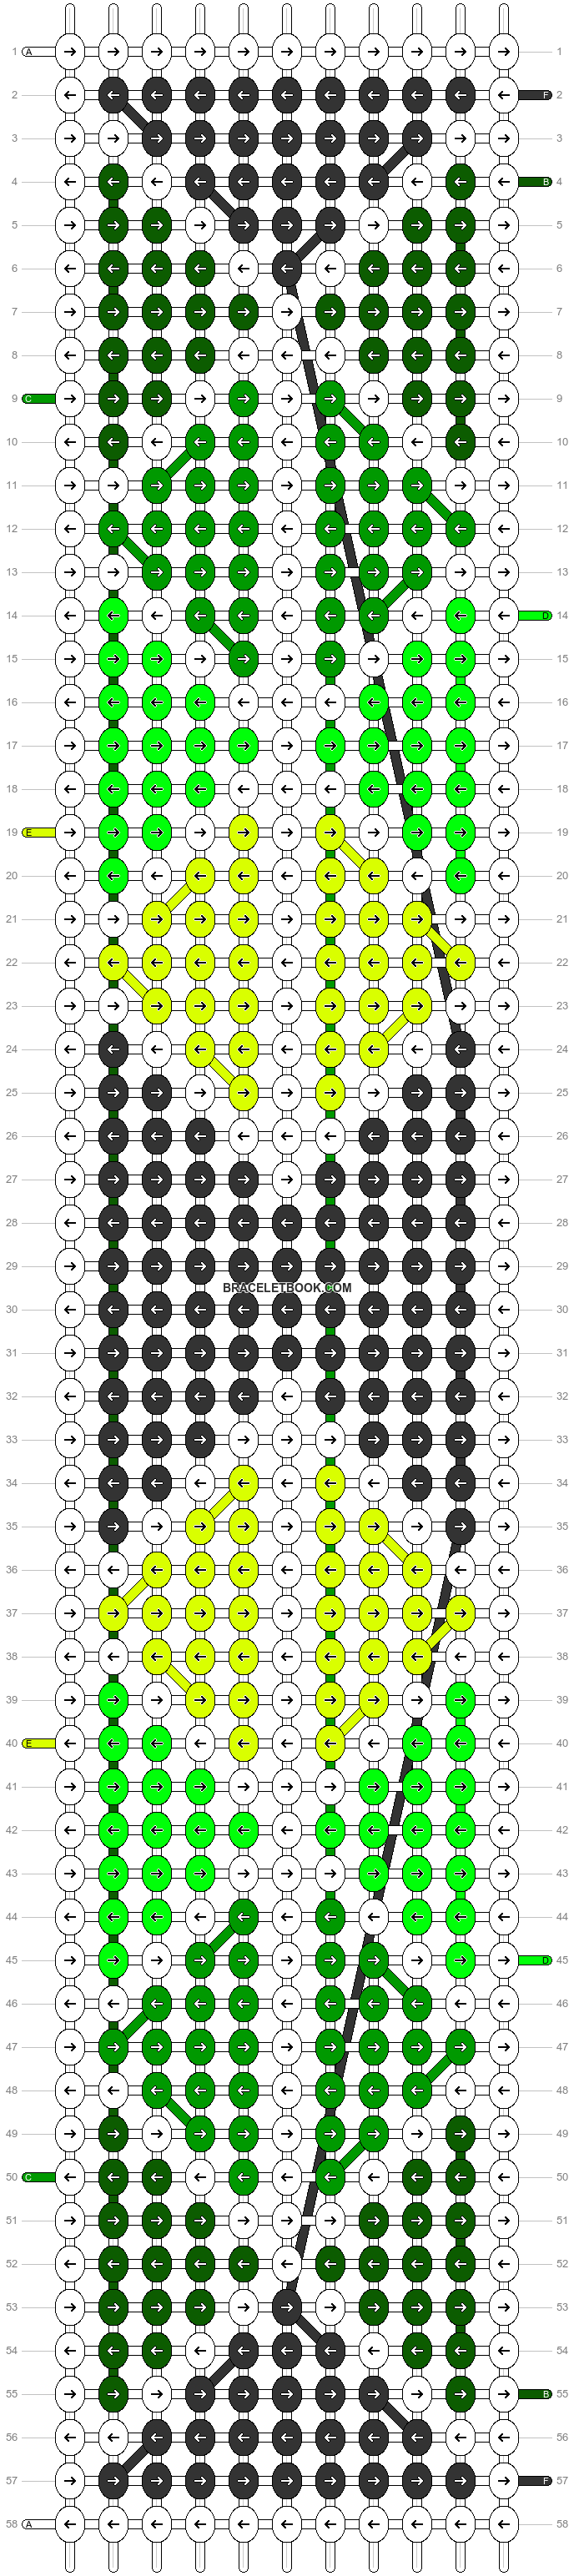 Alpha pattern #33636 variation #24730 pattern